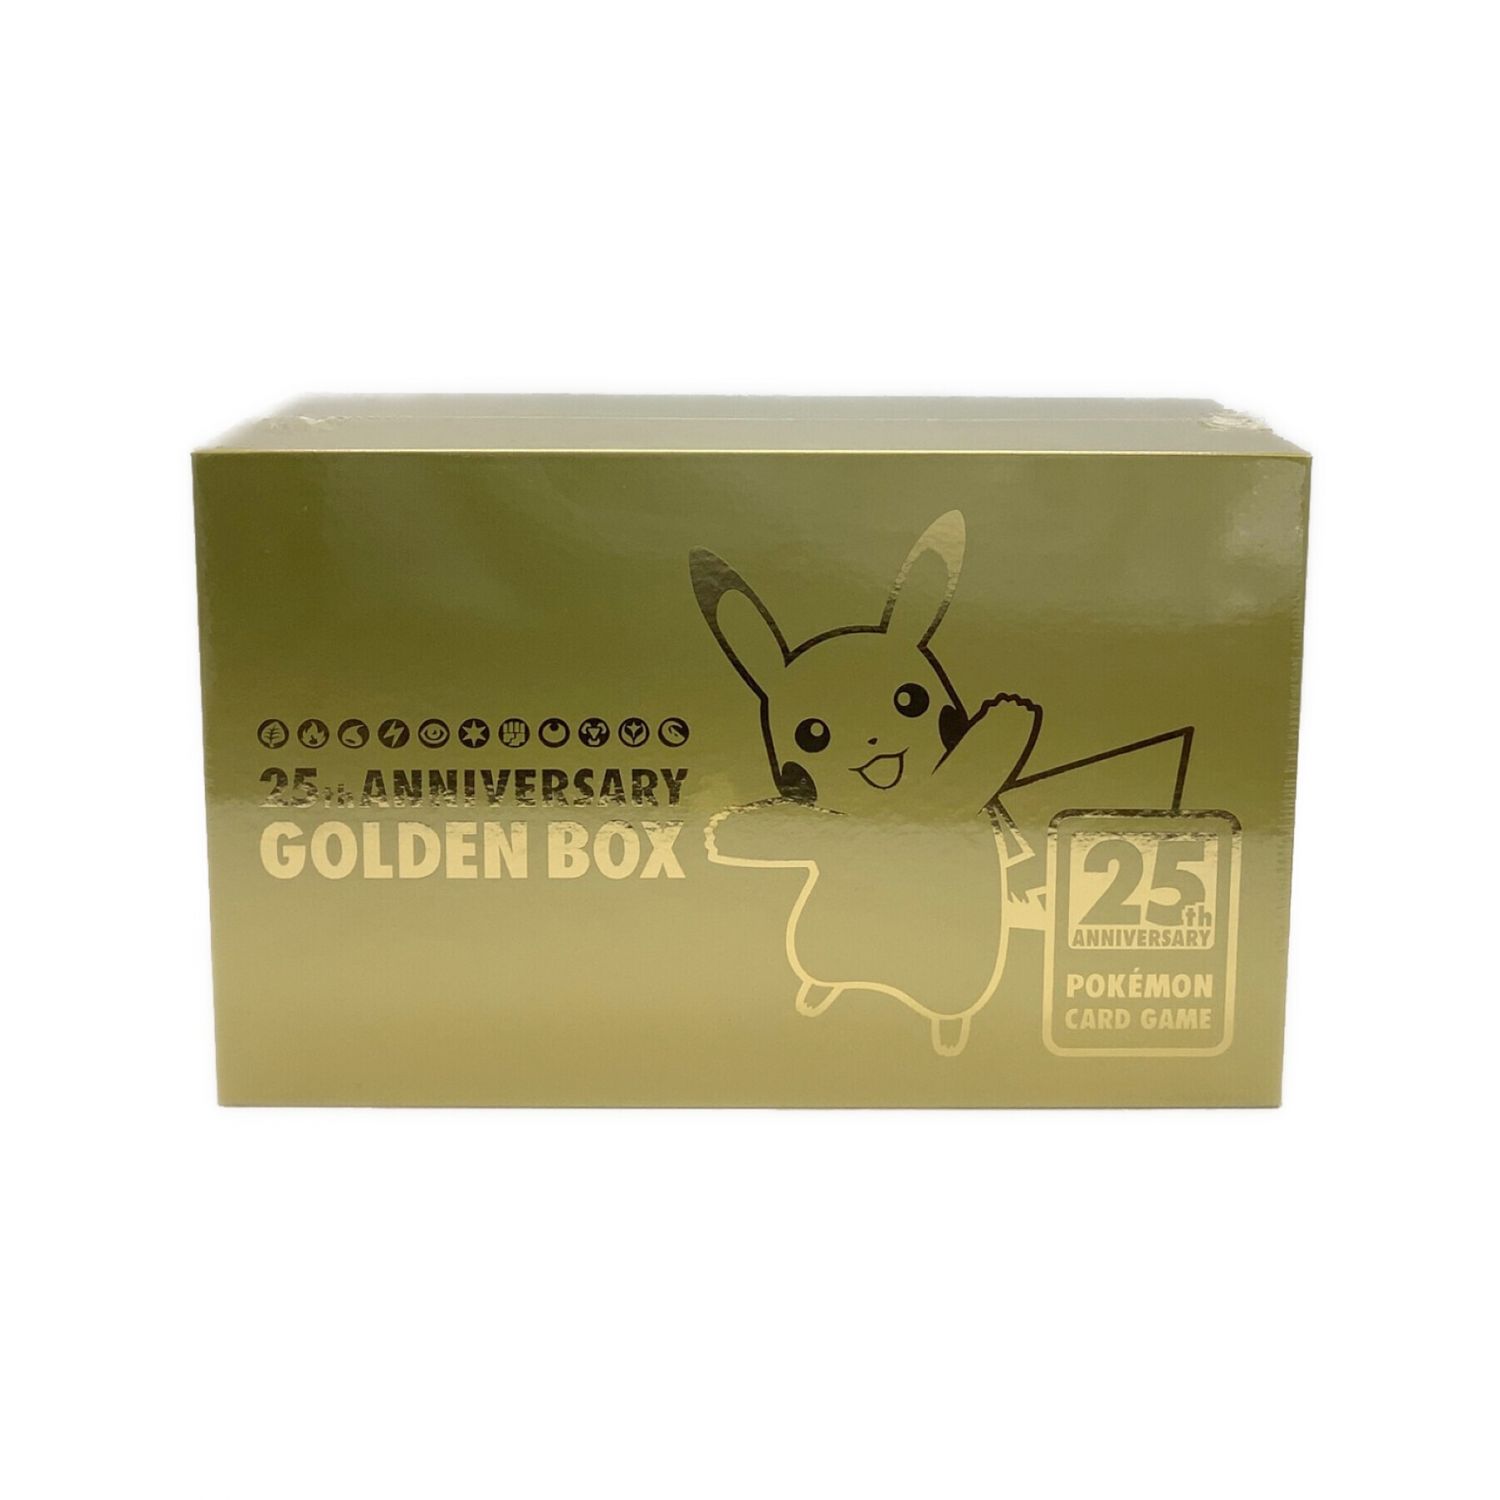 25th ANNIVERSARY GOLDEN BOX(Amazon産)カードサプライ/アクセサリ